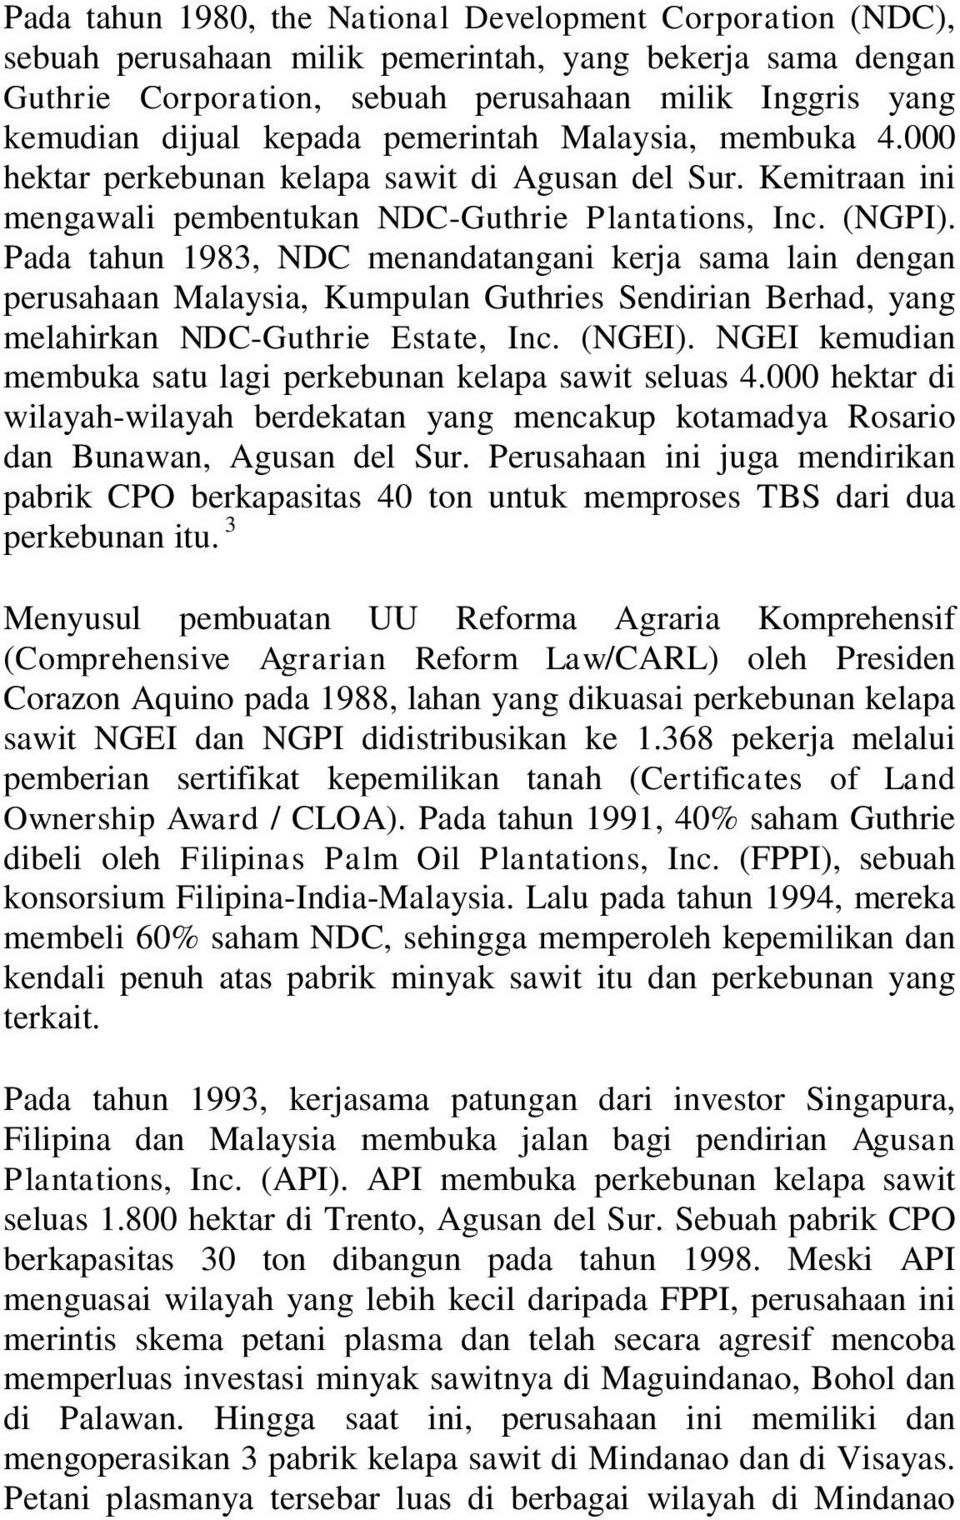 Pada tahun 1983, NDC menandatangani kerja sama lain dengan perusahaan Malaysia, Kumpulan Guthries Sendirian Berhad, yang melahirkan NDC-Guthrie Estate, Inc. (NGEI).